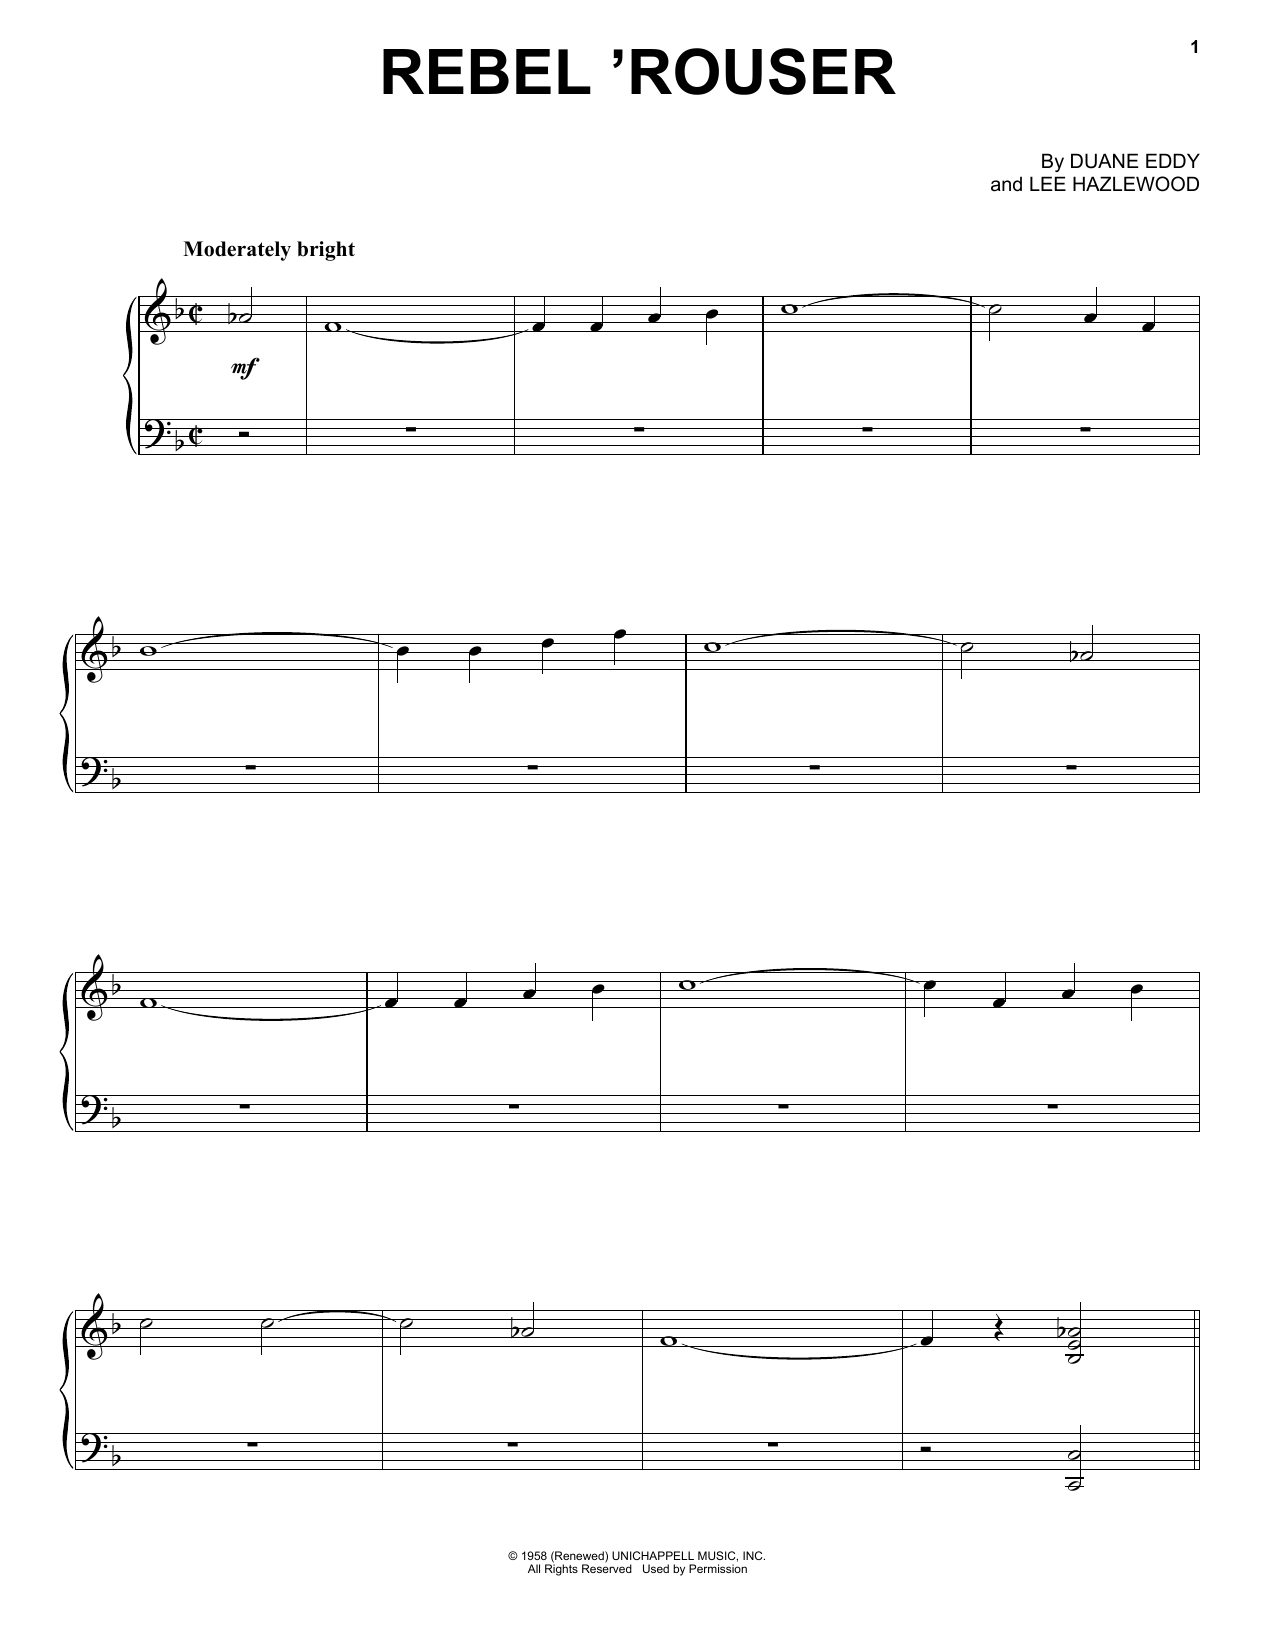 Duane Eddy Rebel 'Rouser Sheet Music Notes & Chords for Guitar Tab Play-Along - Download or Print PDF